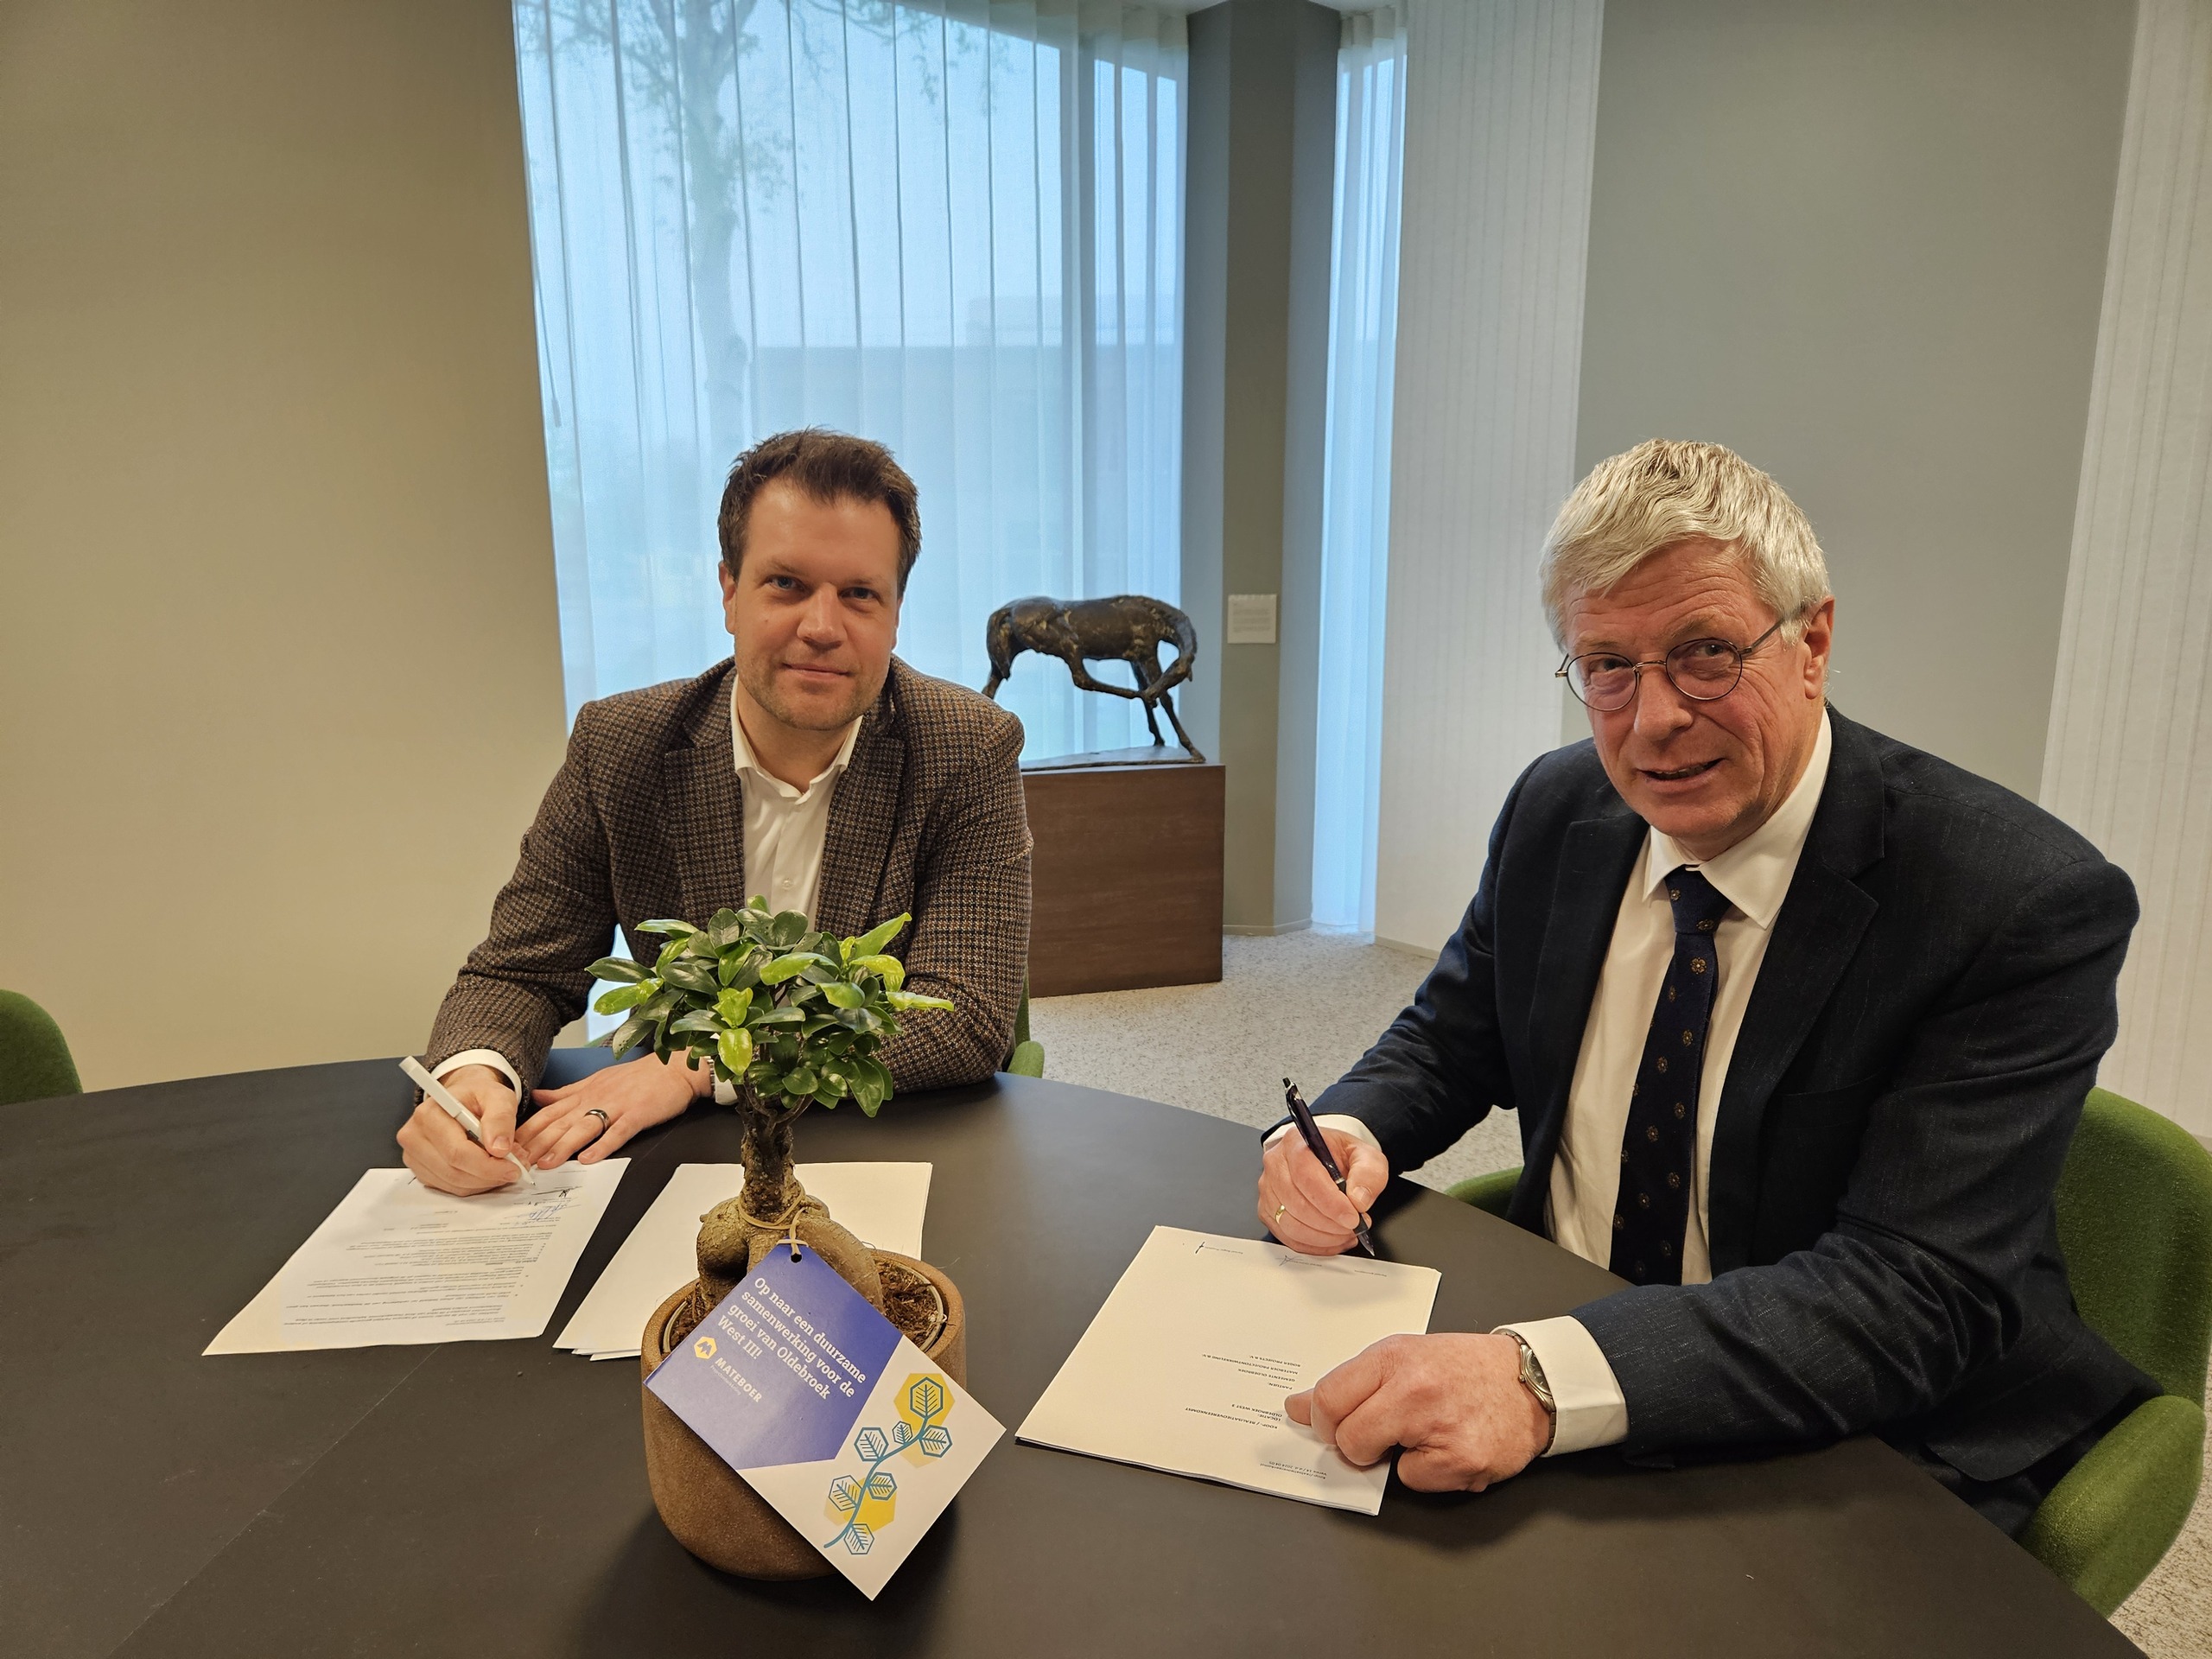 Ondertekening overeenkomst Oldebroek West 3 met Tom Munter van Mateboer en wethouder Ben Engberts